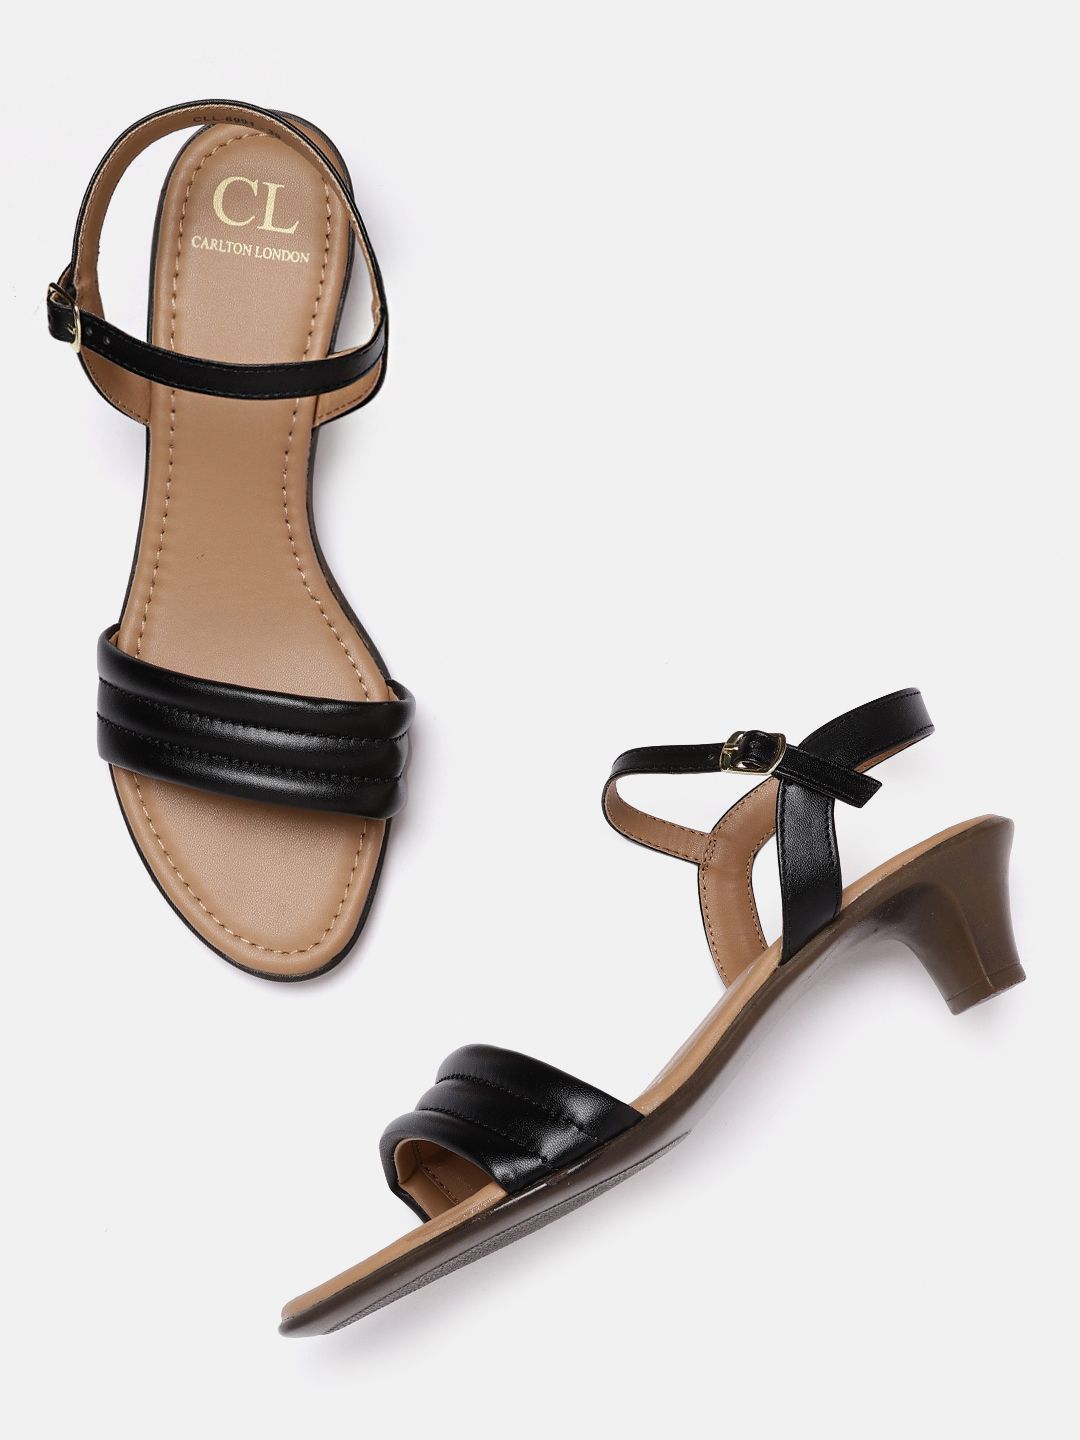 Carlton London Women Black Solid Block Heels Price in India